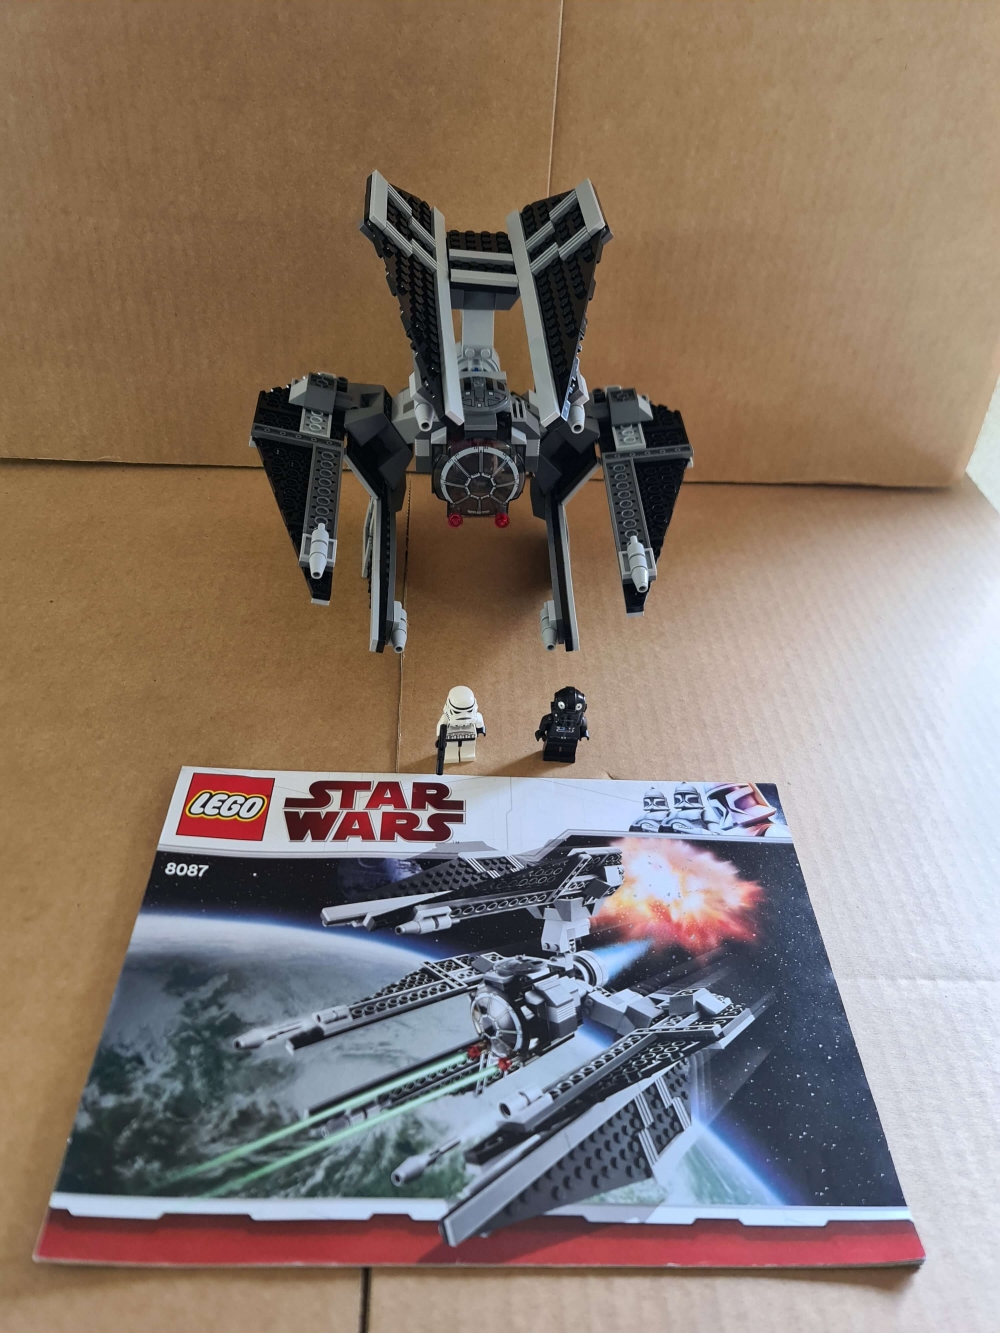 Sett 8087 fra Lego Star Wars serien.
Meget pent. Komplett med manual.